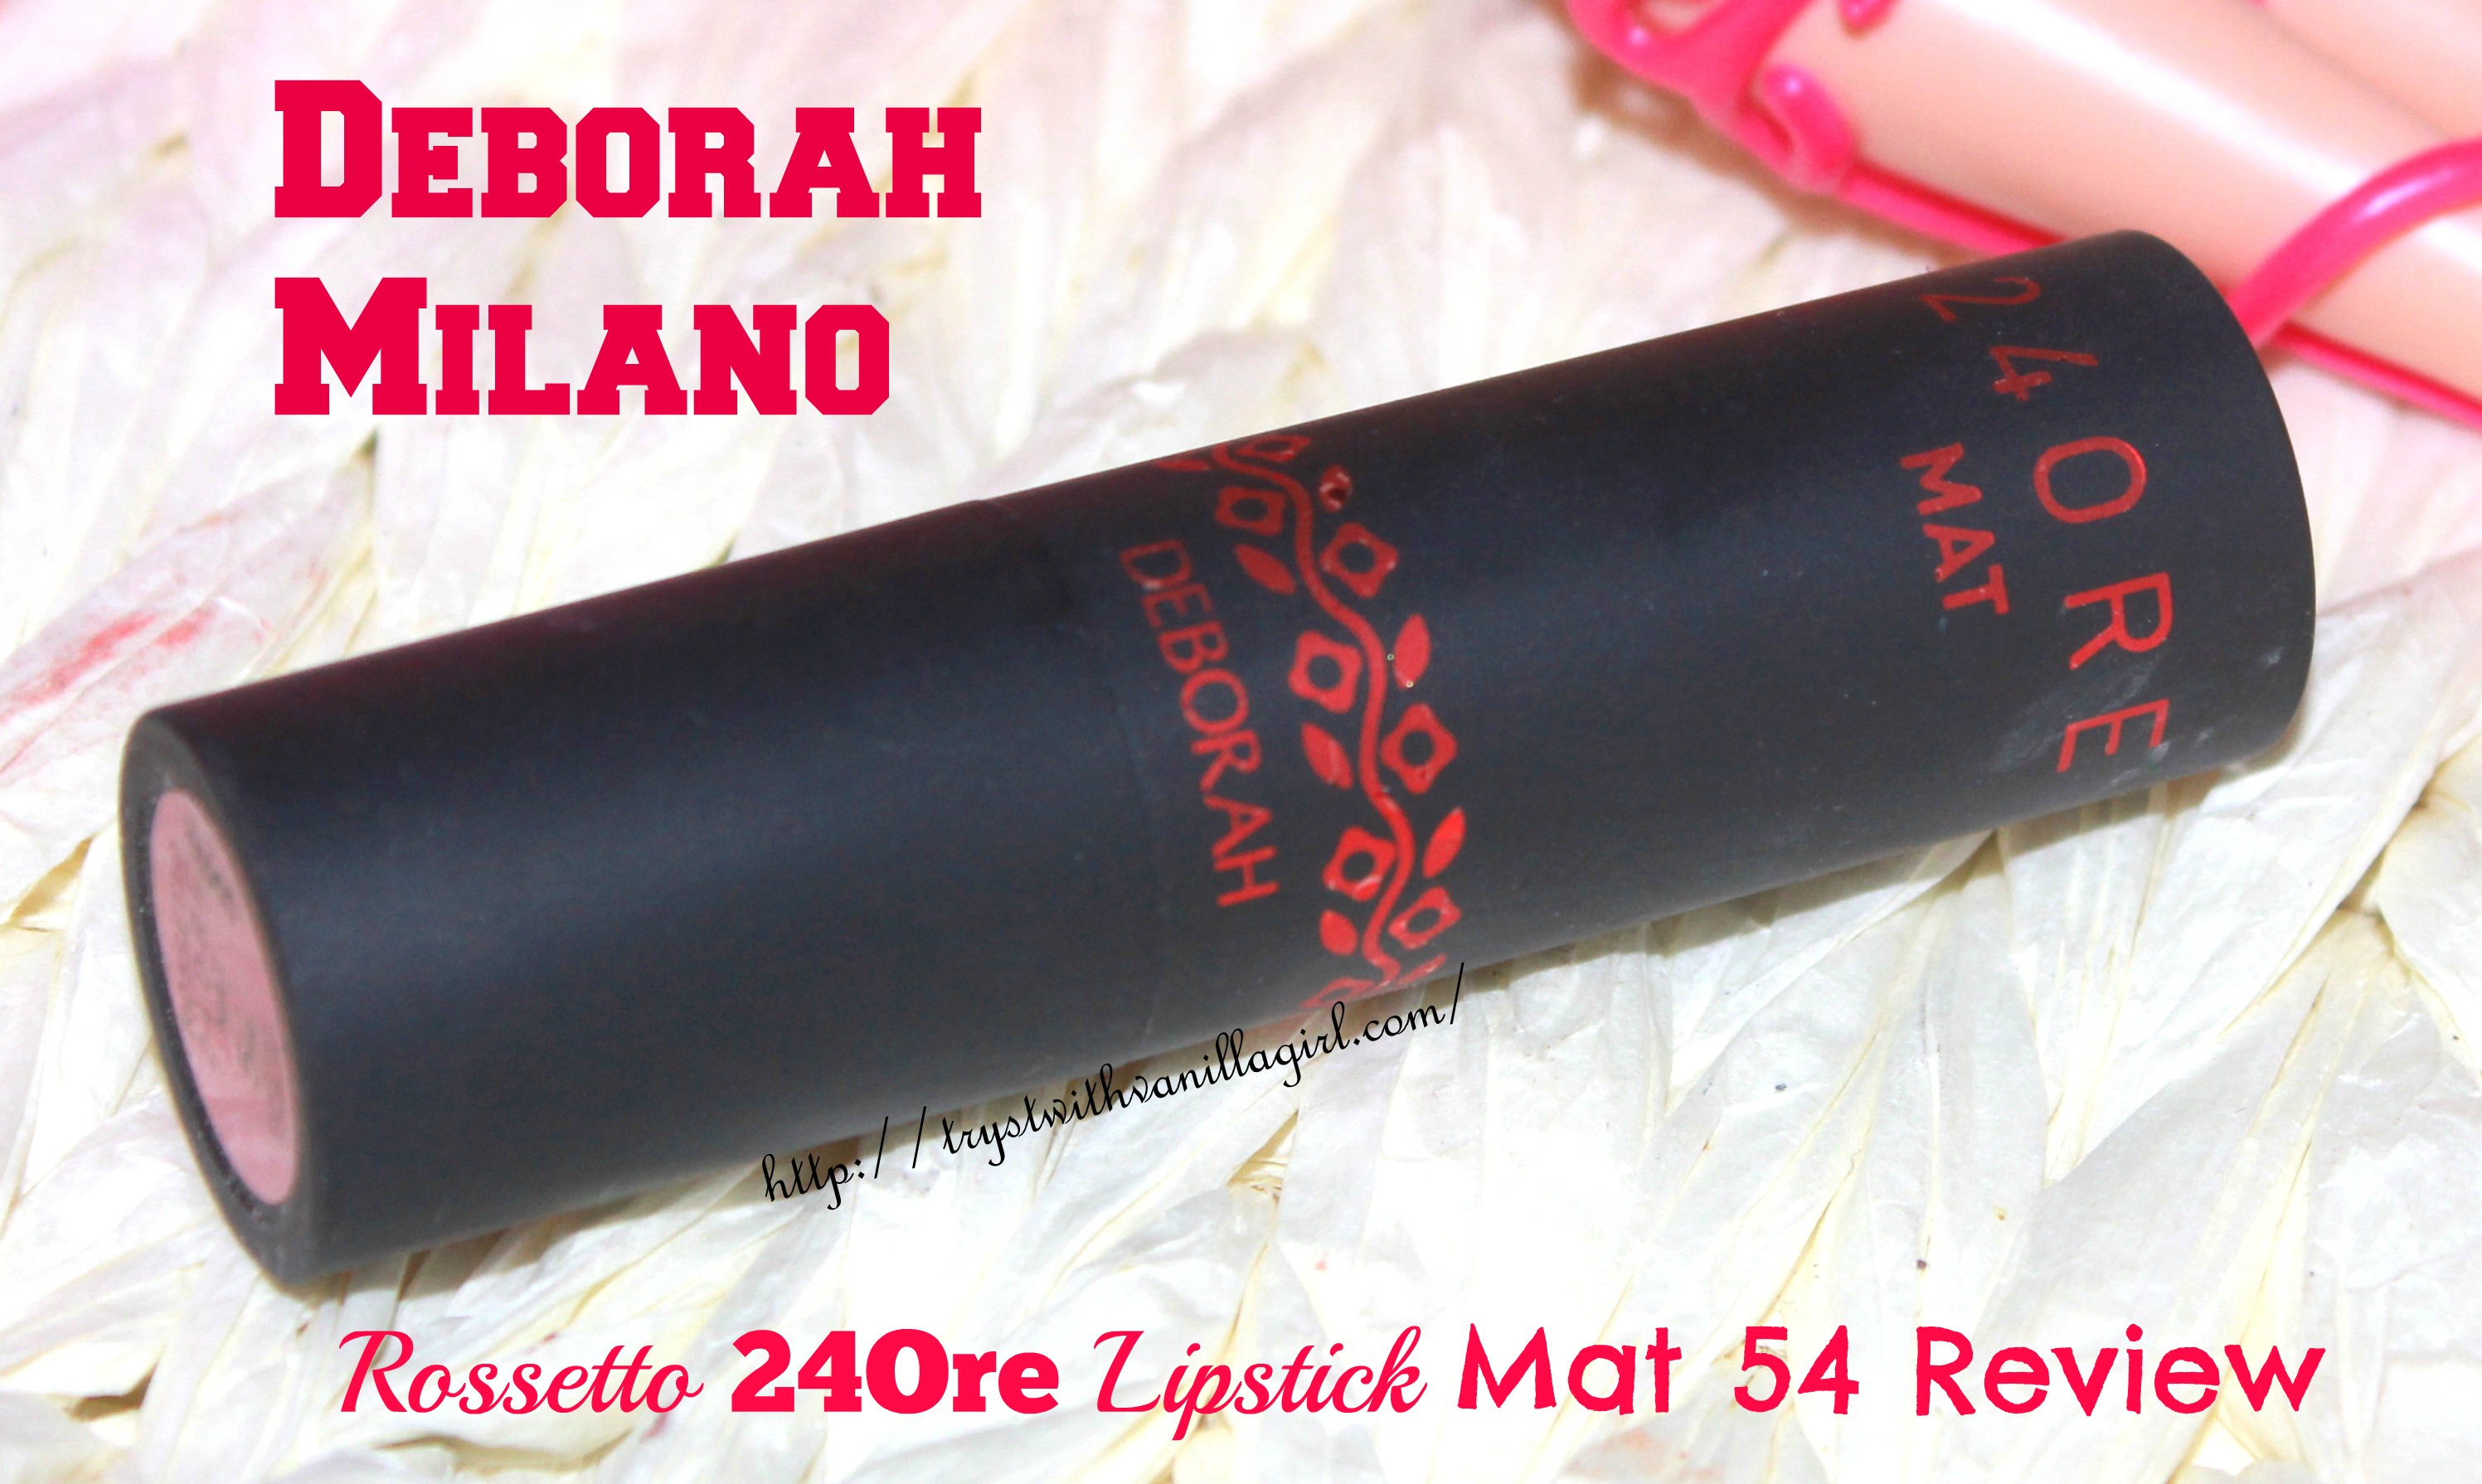 Deborah Milano Rossetto 24Ore Lipstick Mat 54 Review,Swatch,Photos,FOTD,Deborah Rossetto Atomic Red Mat 06 Dupe